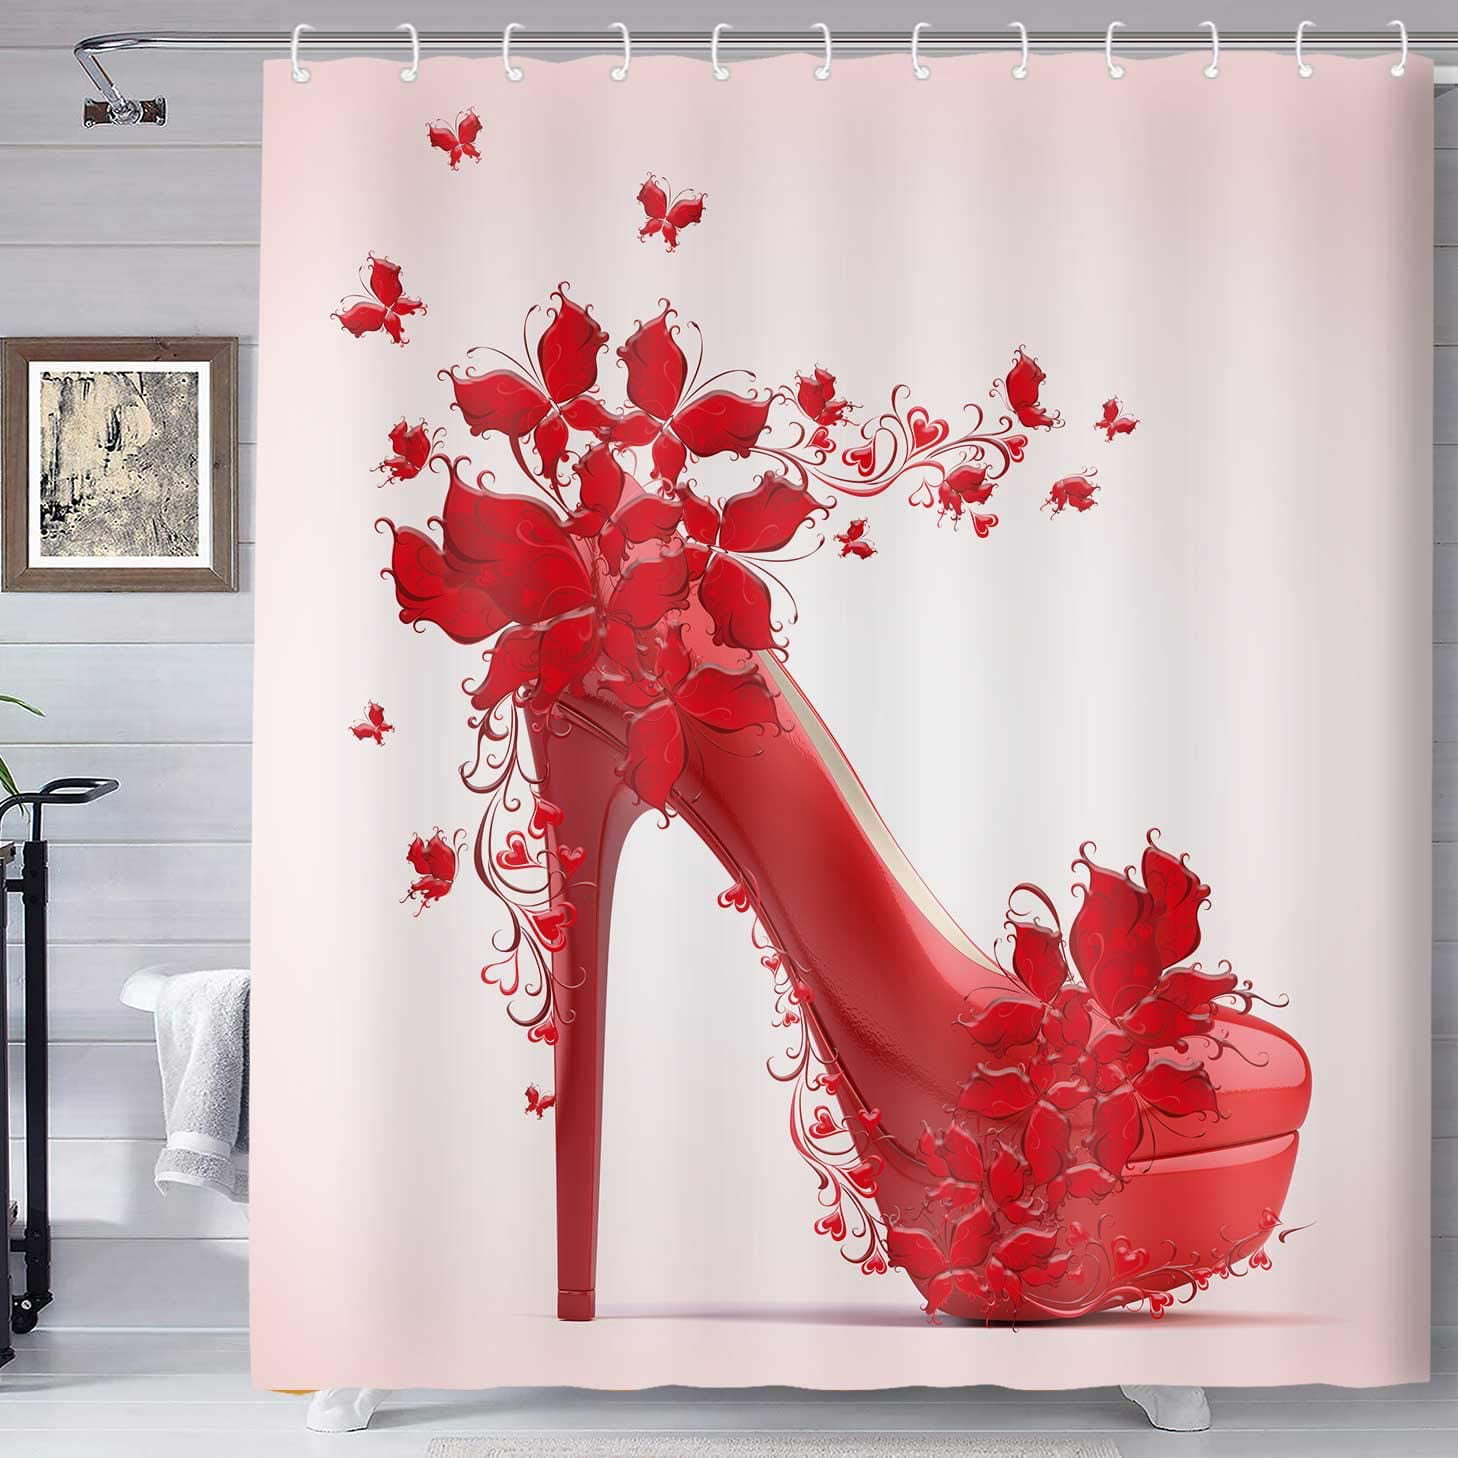 Butterfly High Heel Shoe Shower Curtain 70x70 Fabric w/Hooks 